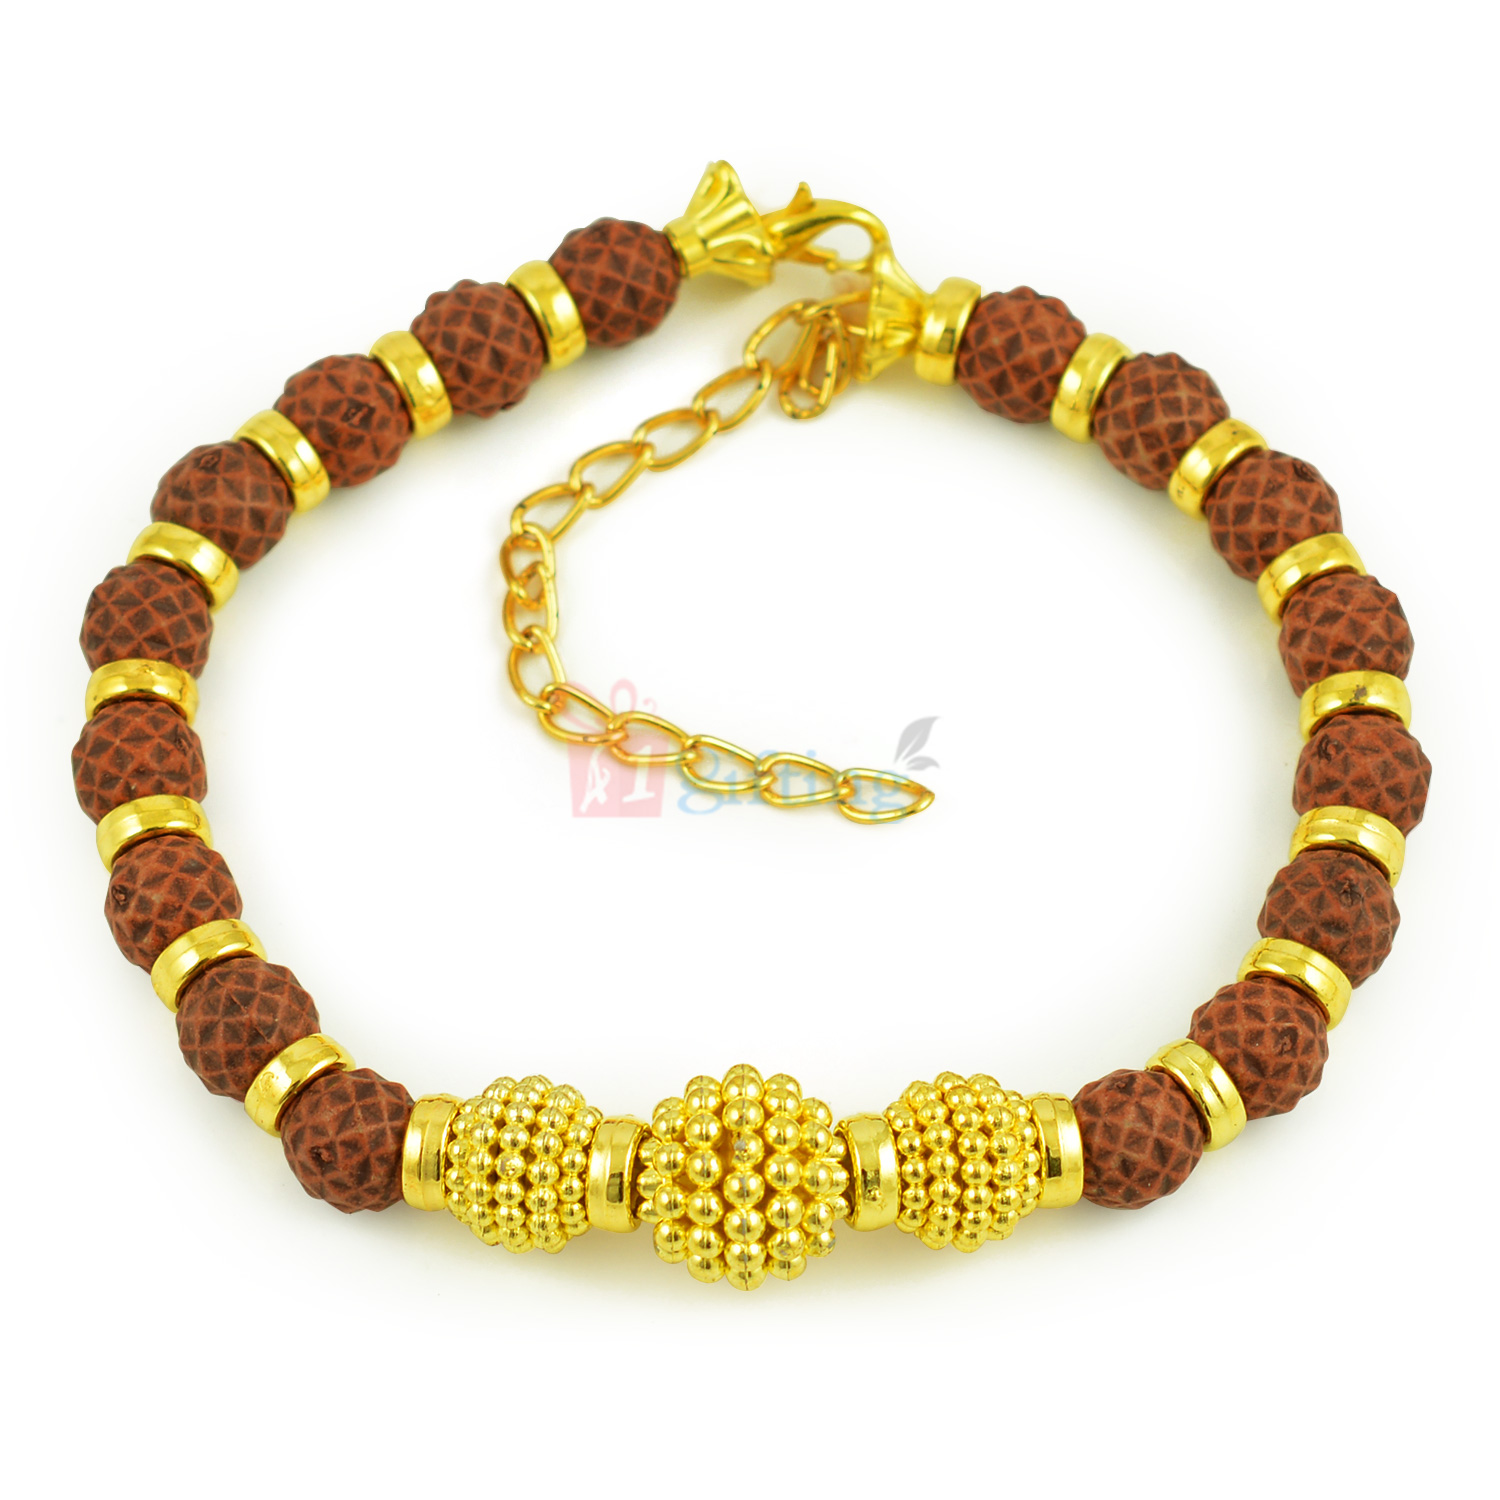 Traditional Looking Golden and Wooden Bracelet Rakhi